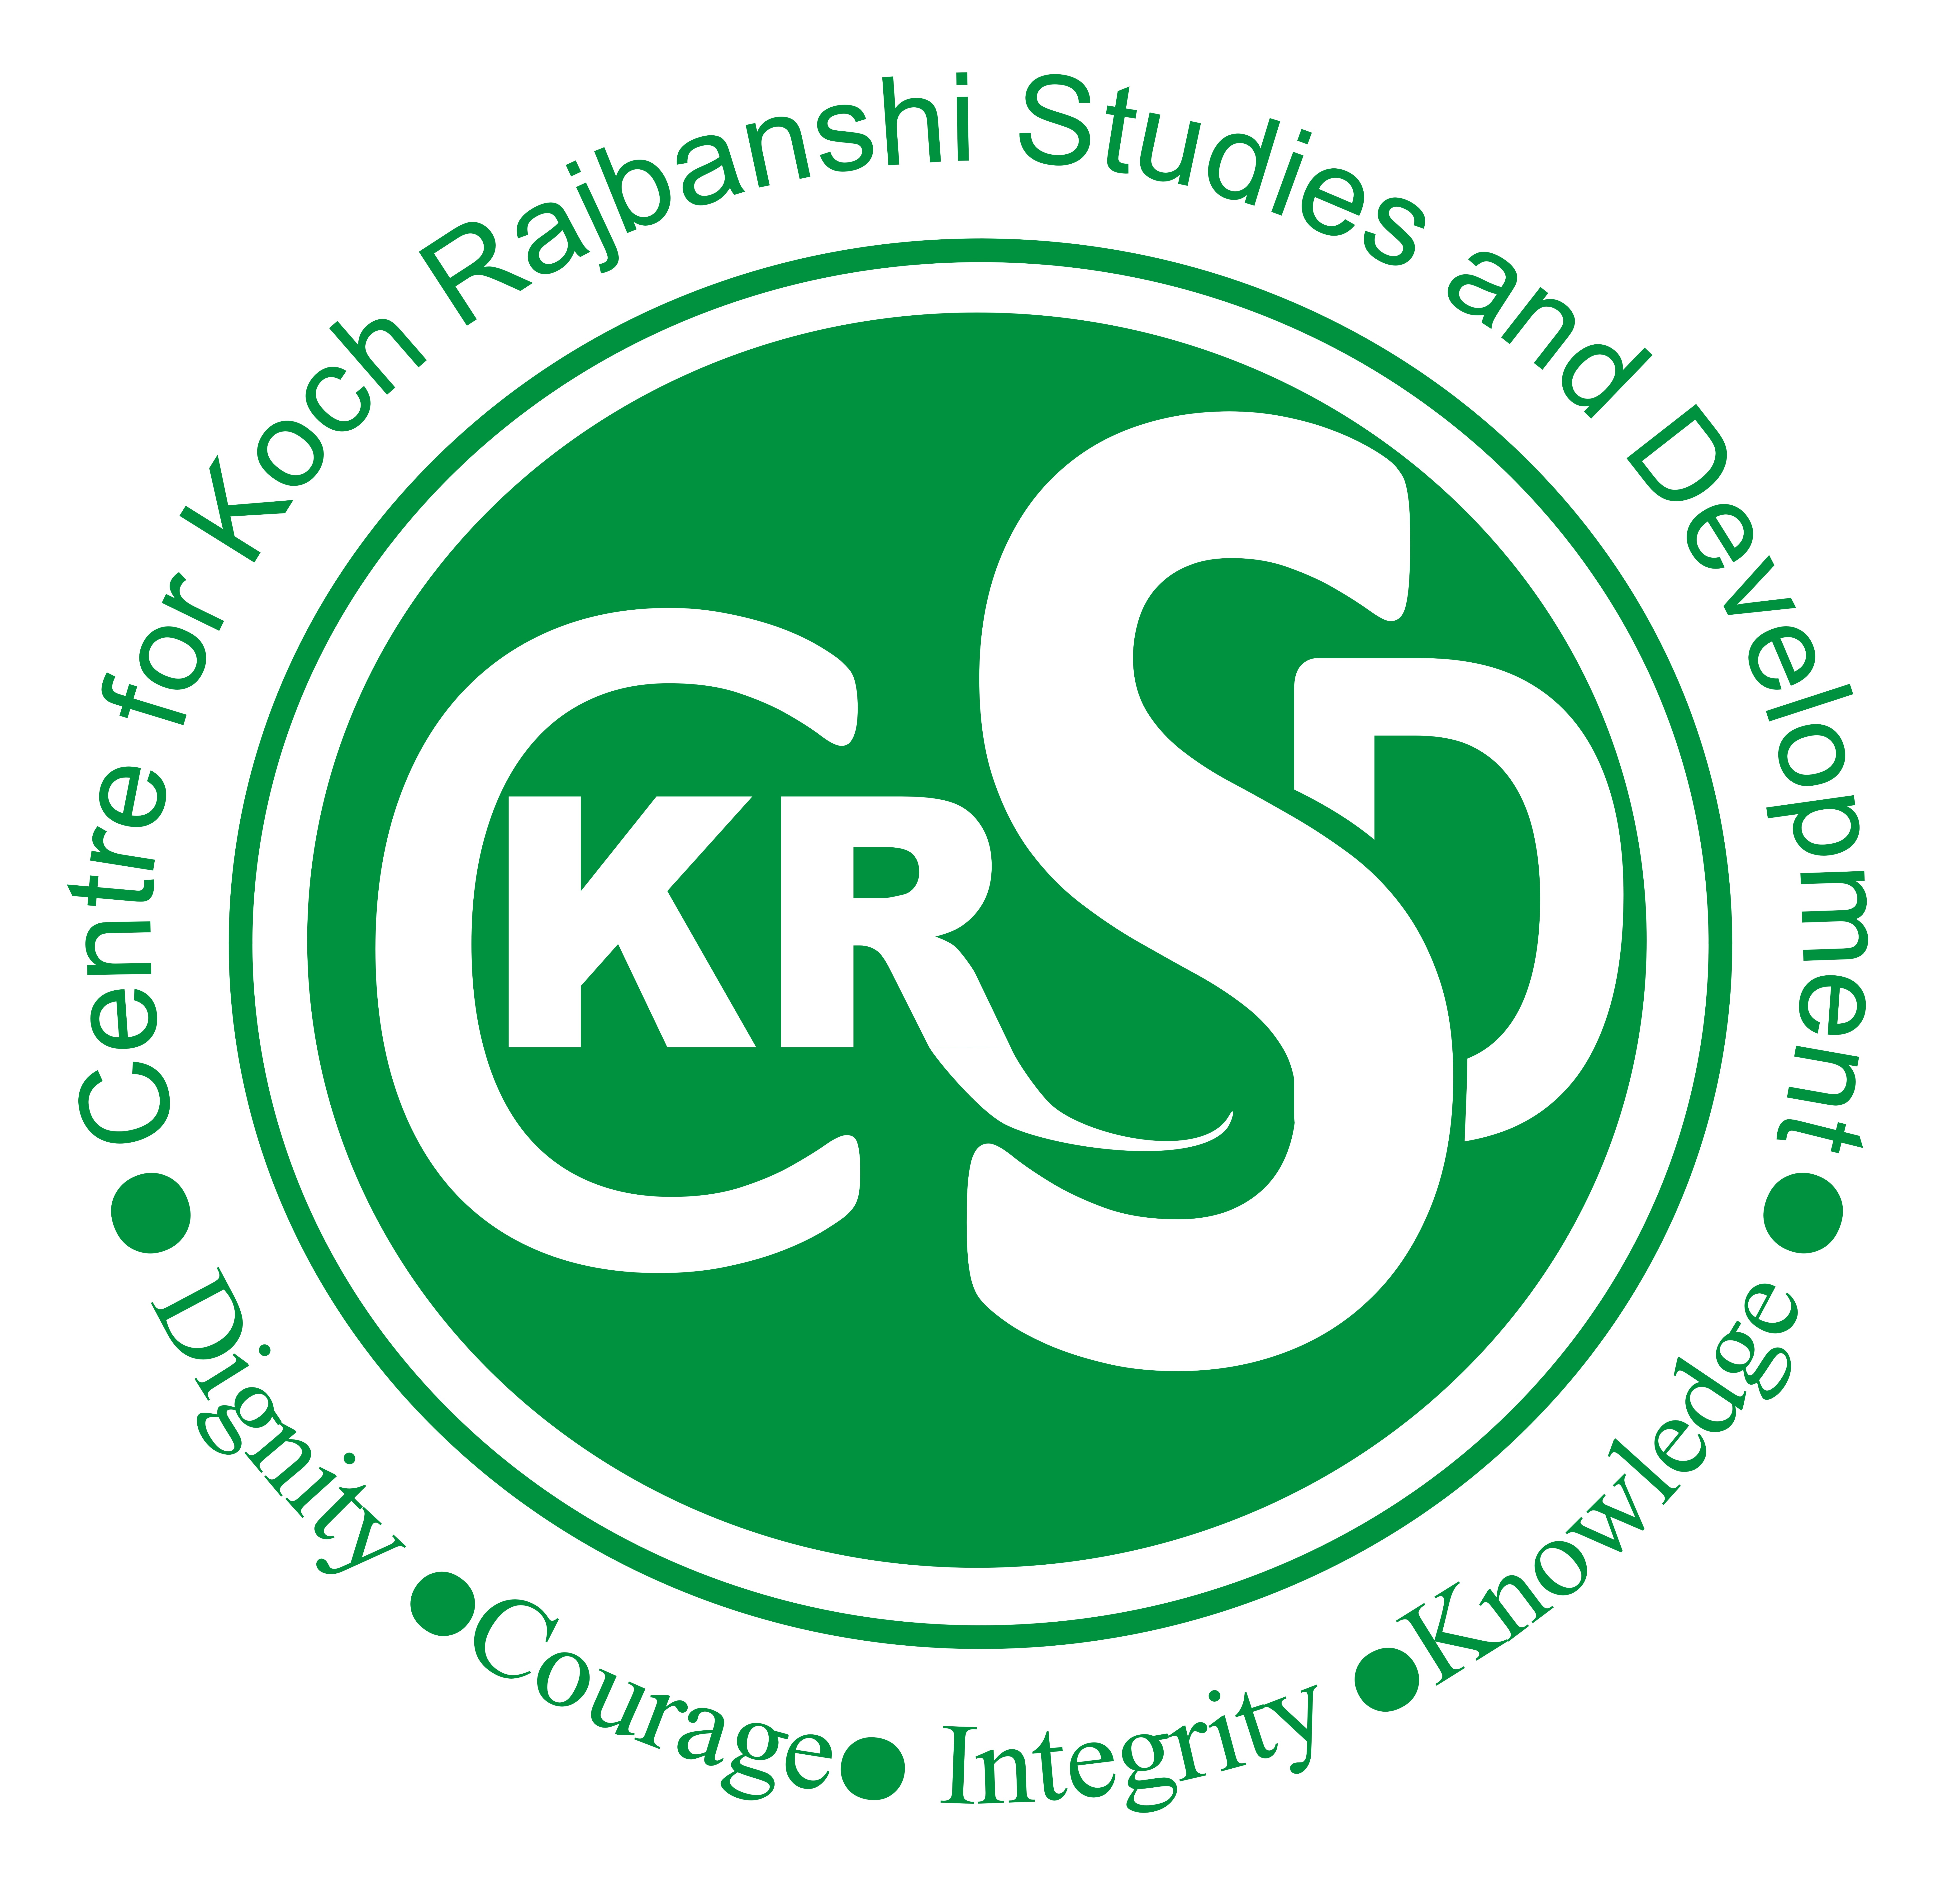 Centre for Koch (Rajbanshi) Studies and Development